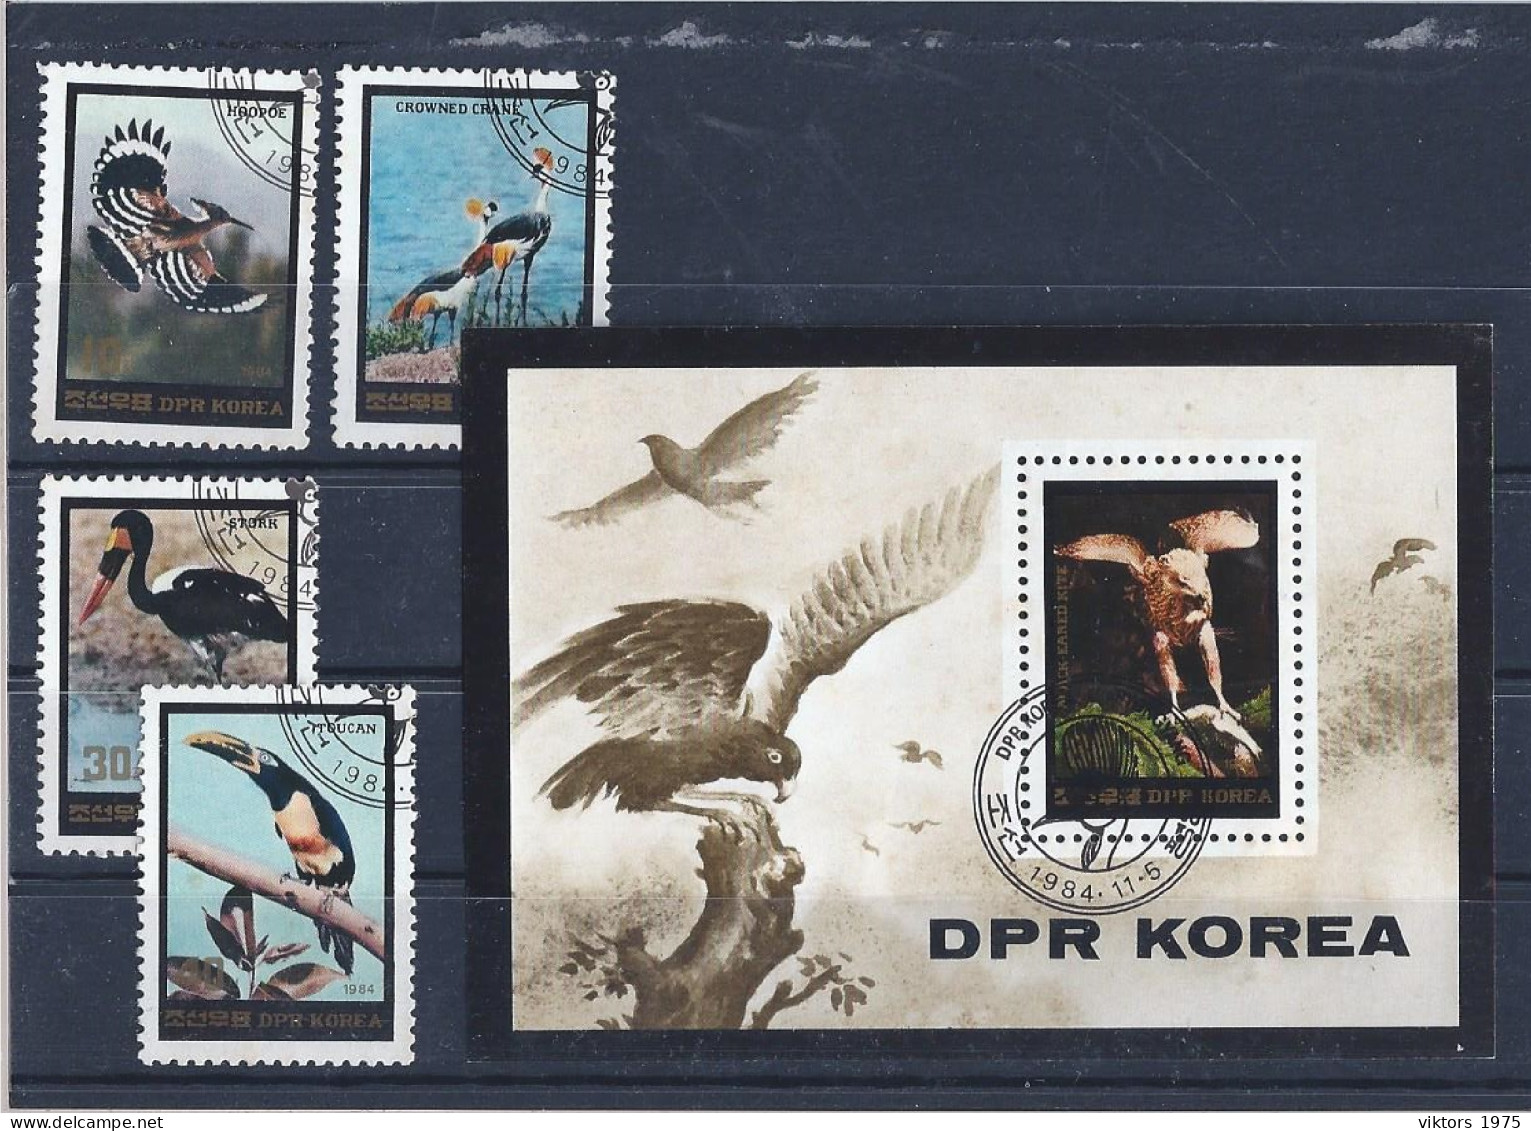 Used (CTO) Stamps Nr.2017-2520 And Block Nr.189 In MICHEL Catalog - Corea Del Norte